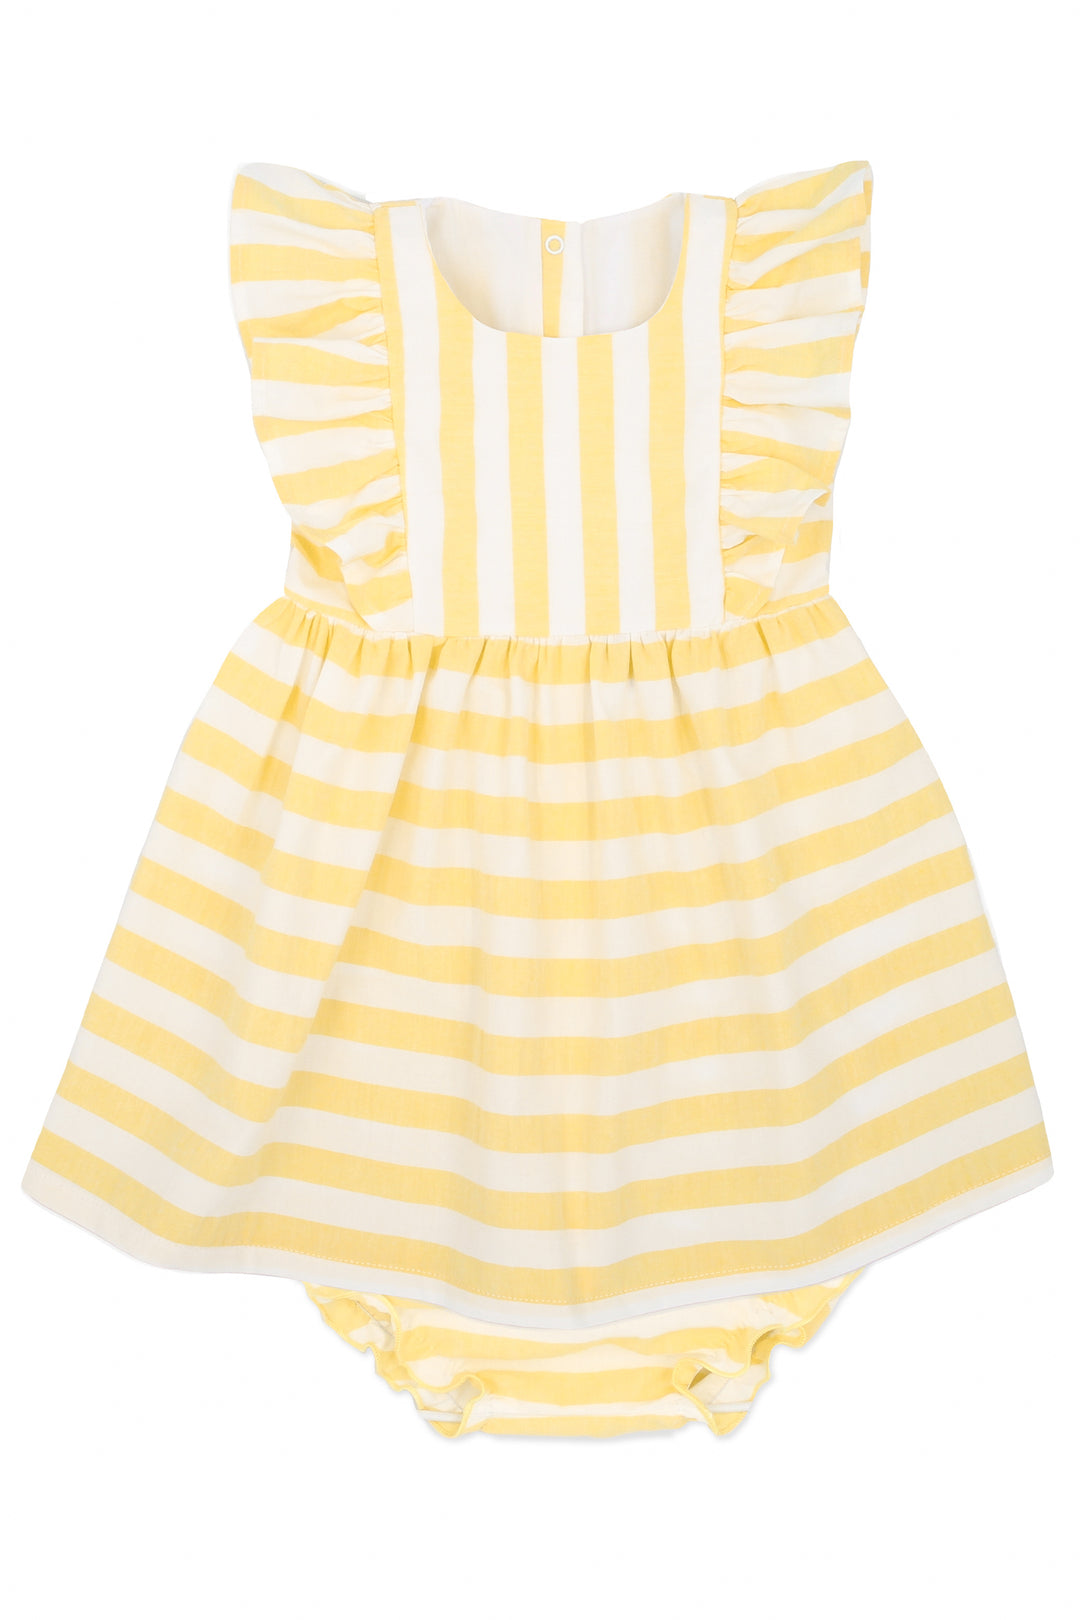 Rapife "Raphaela" Pale Yellow Stripe Dress | Millie and John